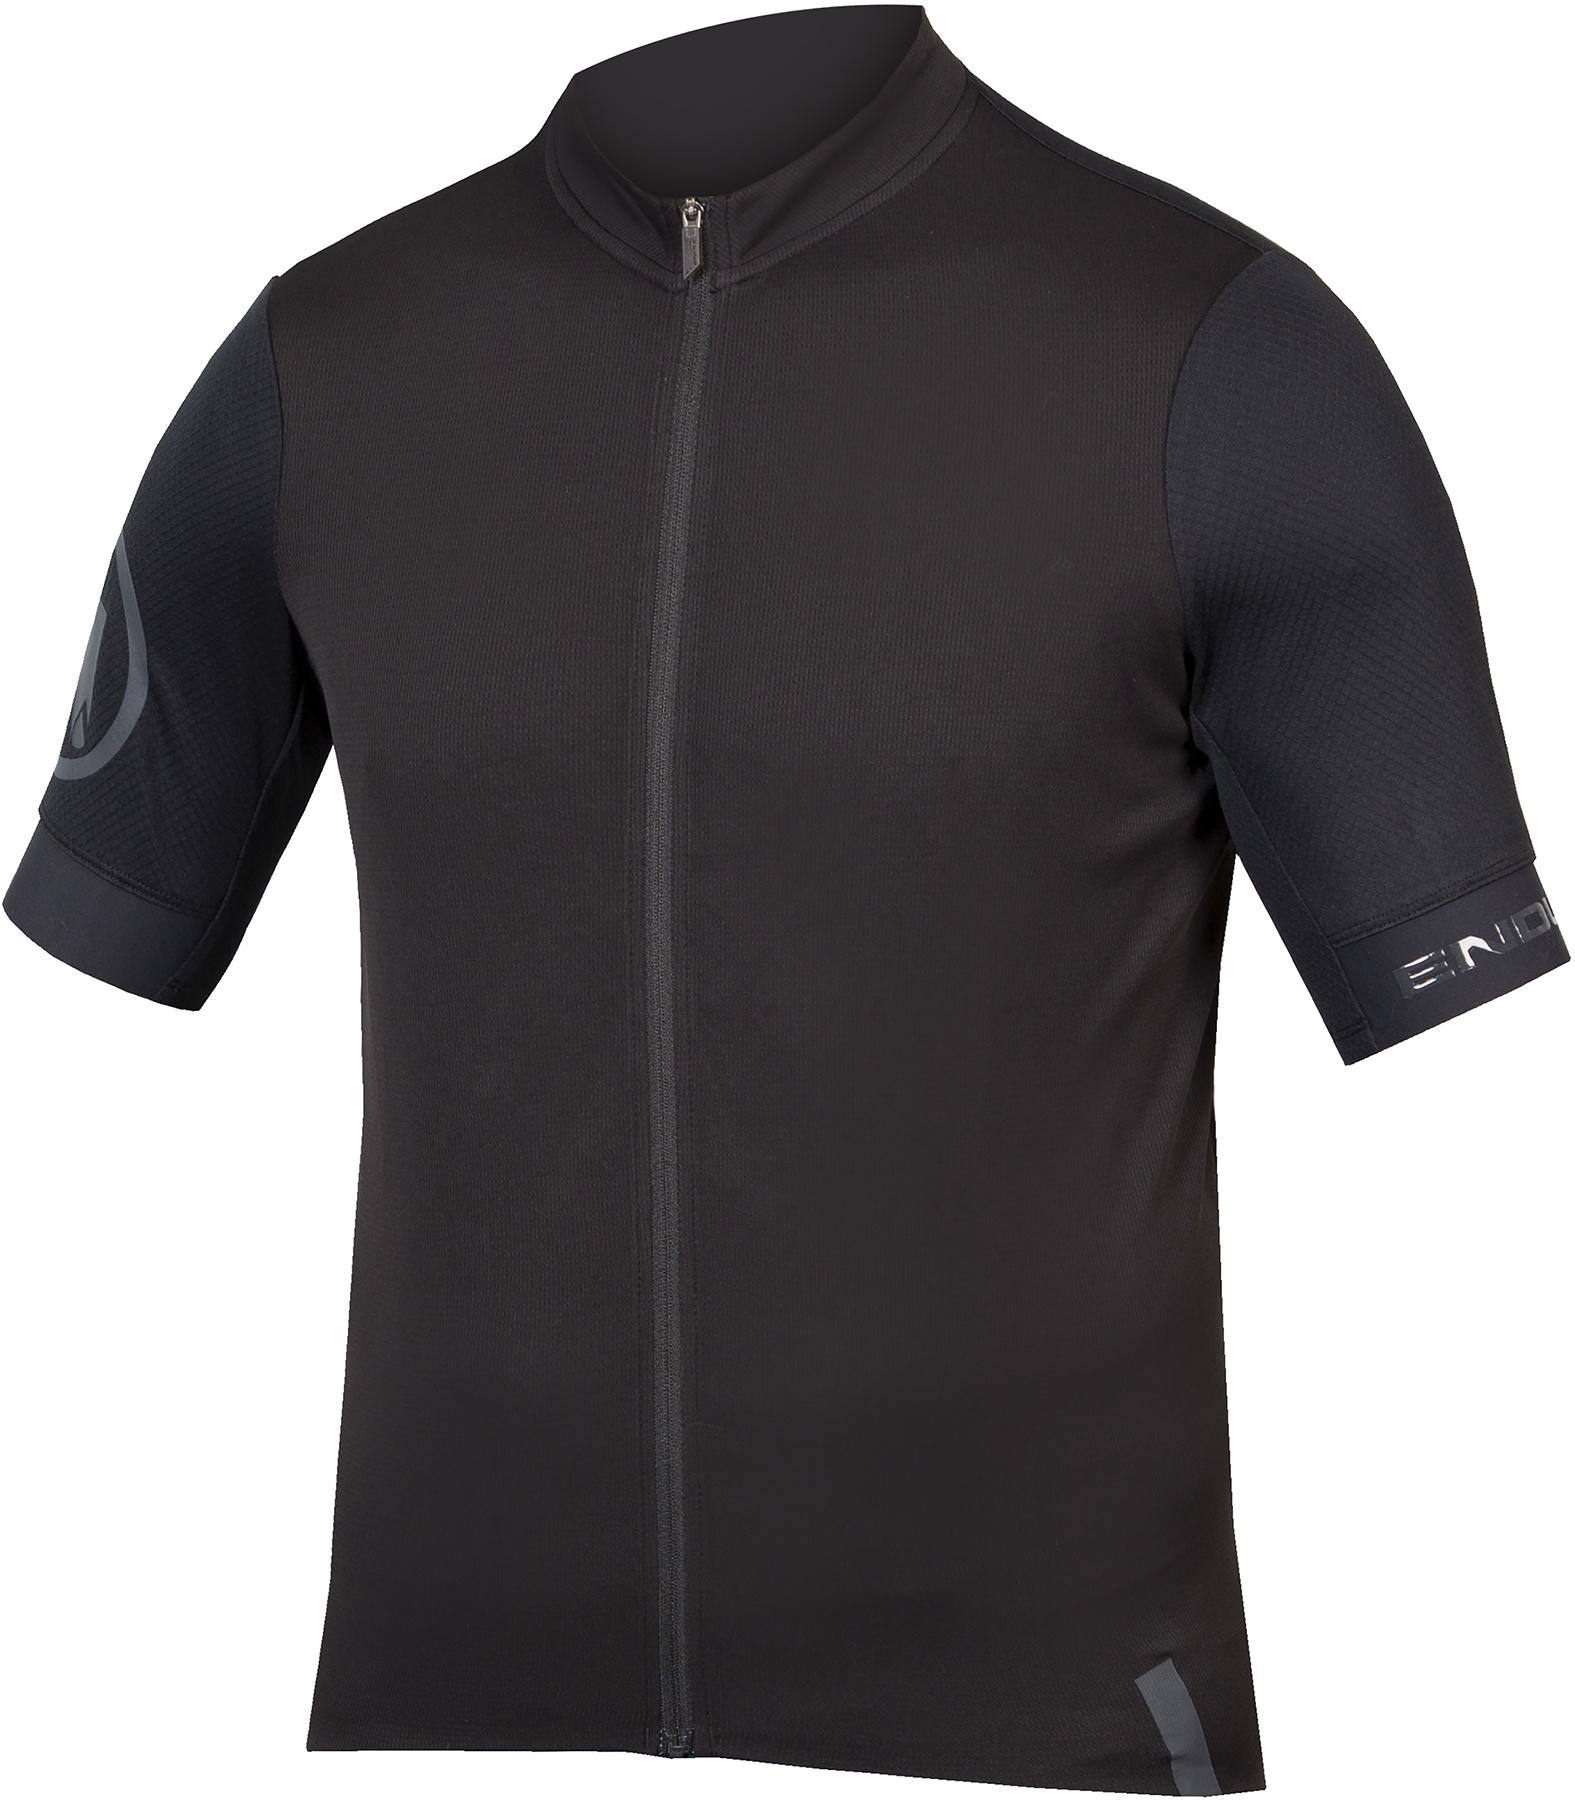 Endura Fs260 Short Sleeve Cycling Jersey - Black